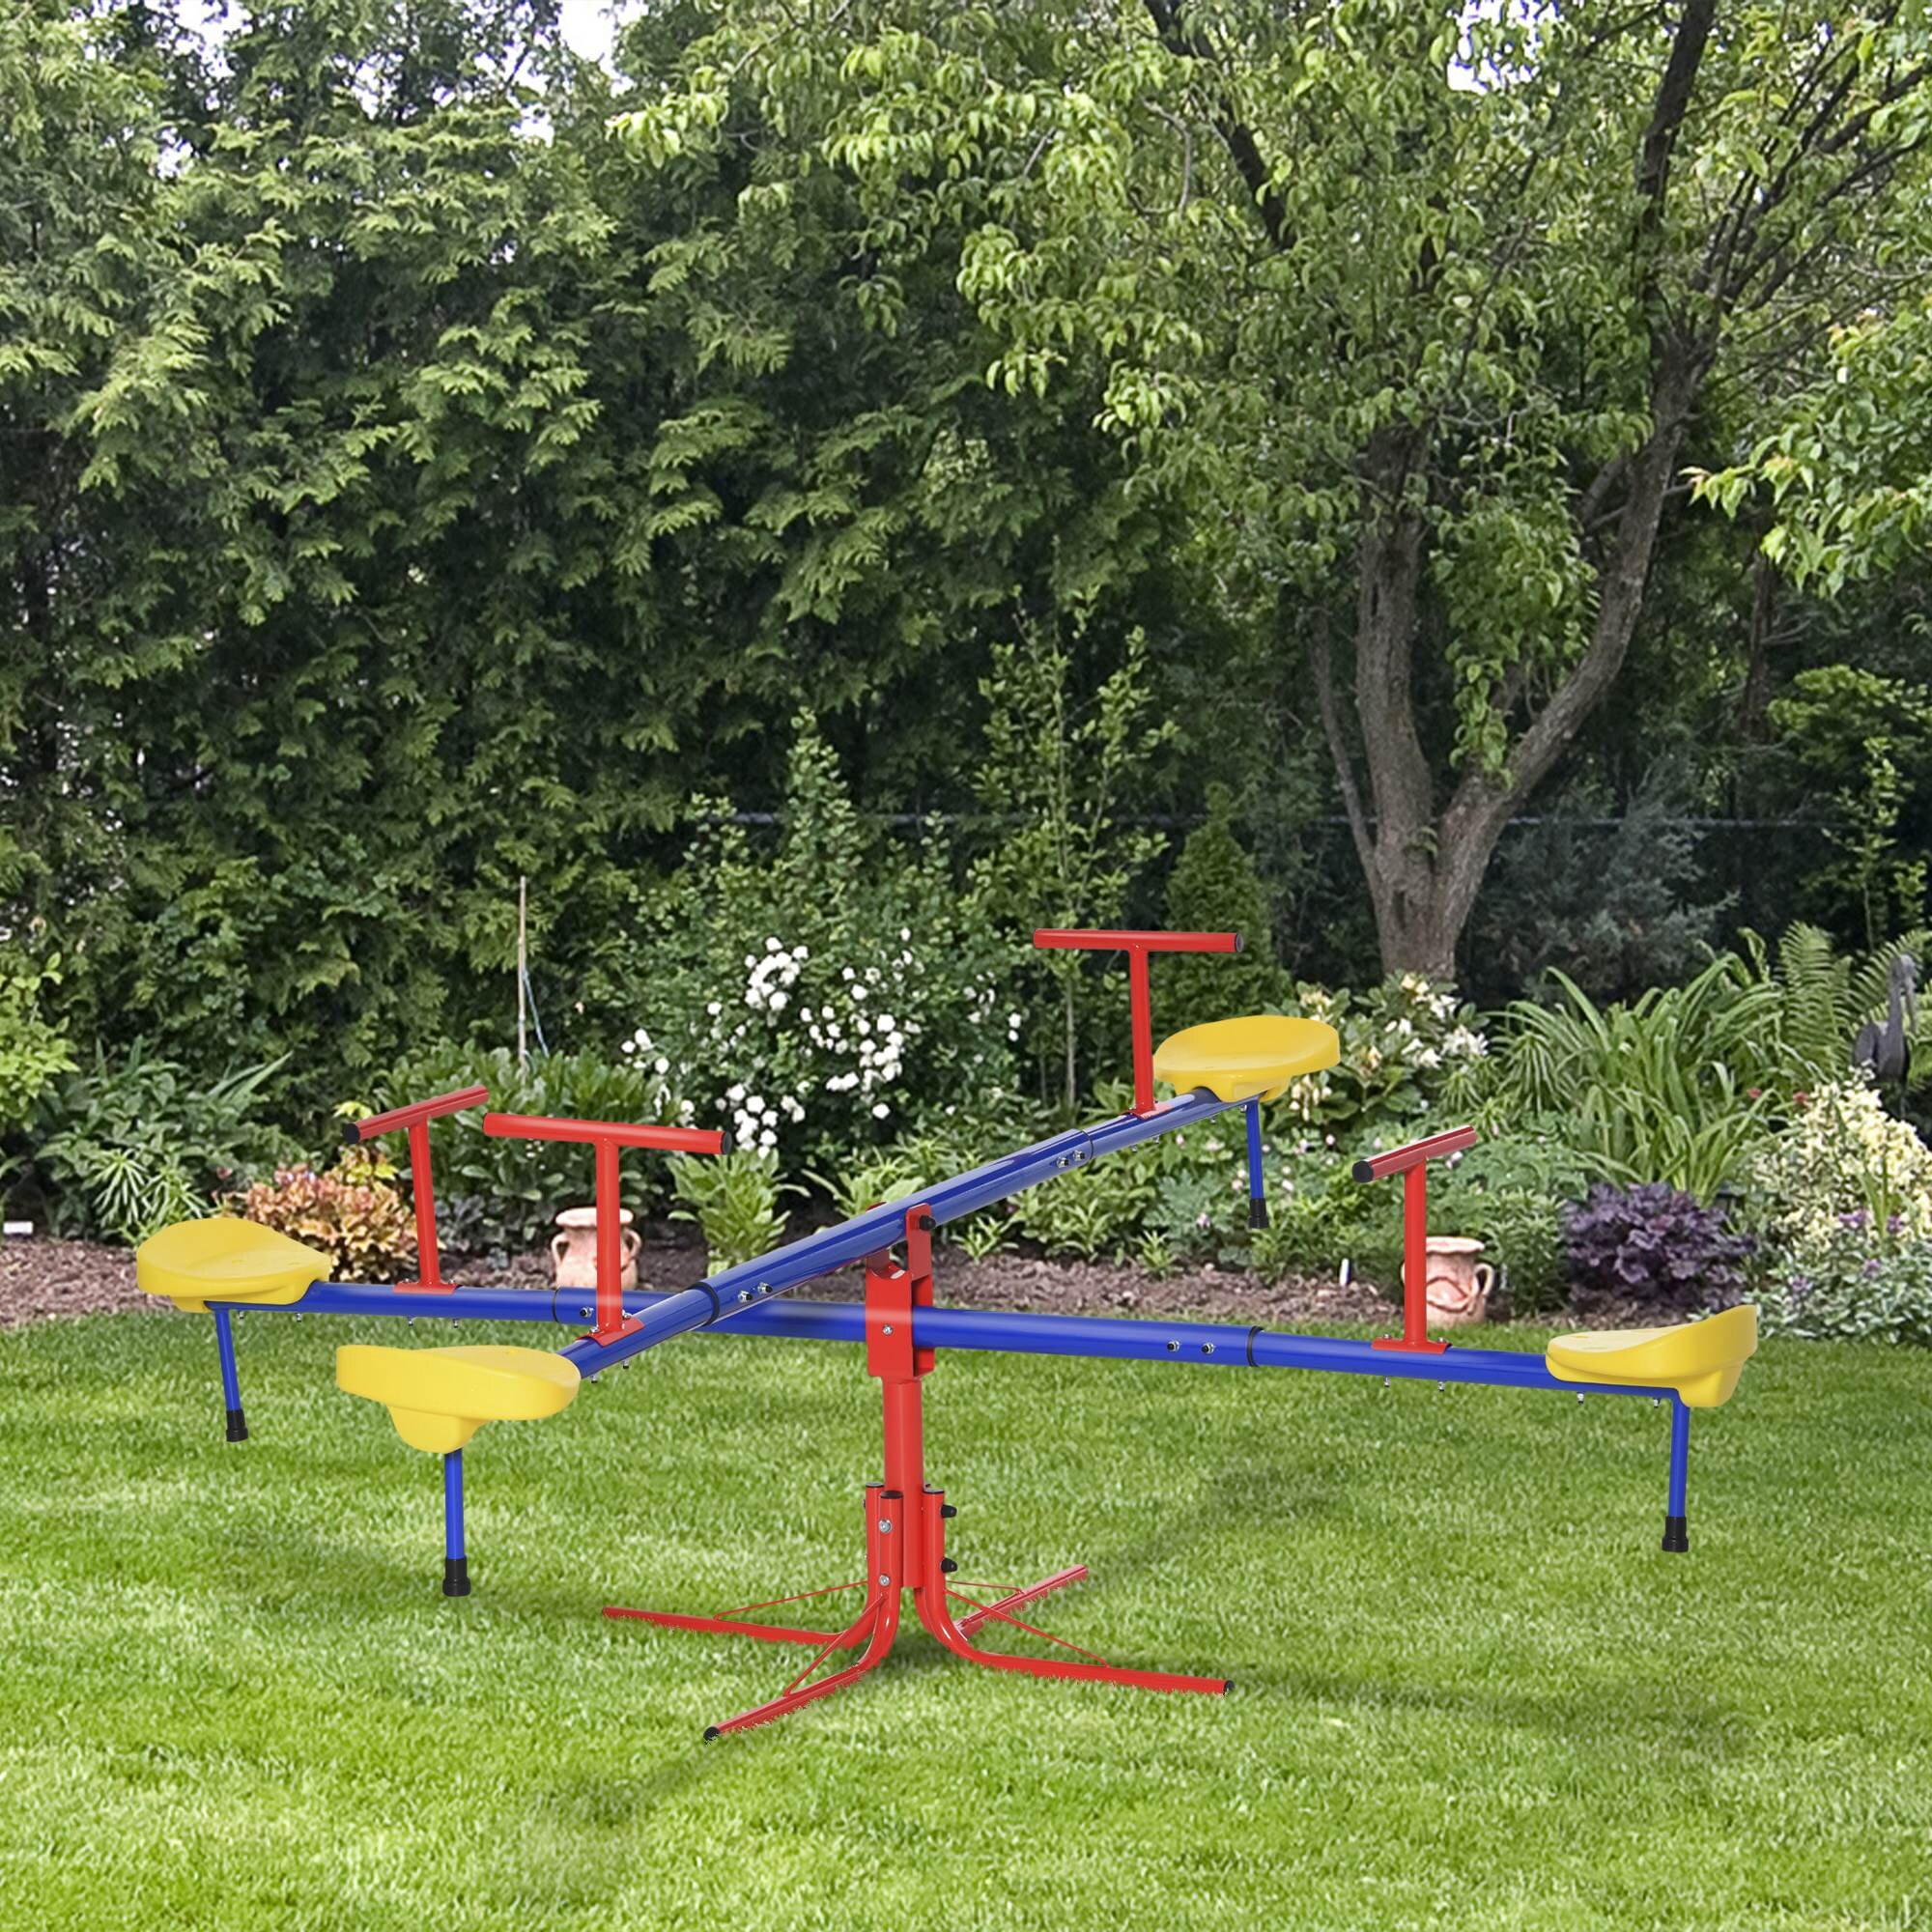 Kids Swing Playground Equipment Toy Spinning Teeter Totter Impact Absorbing Fun 